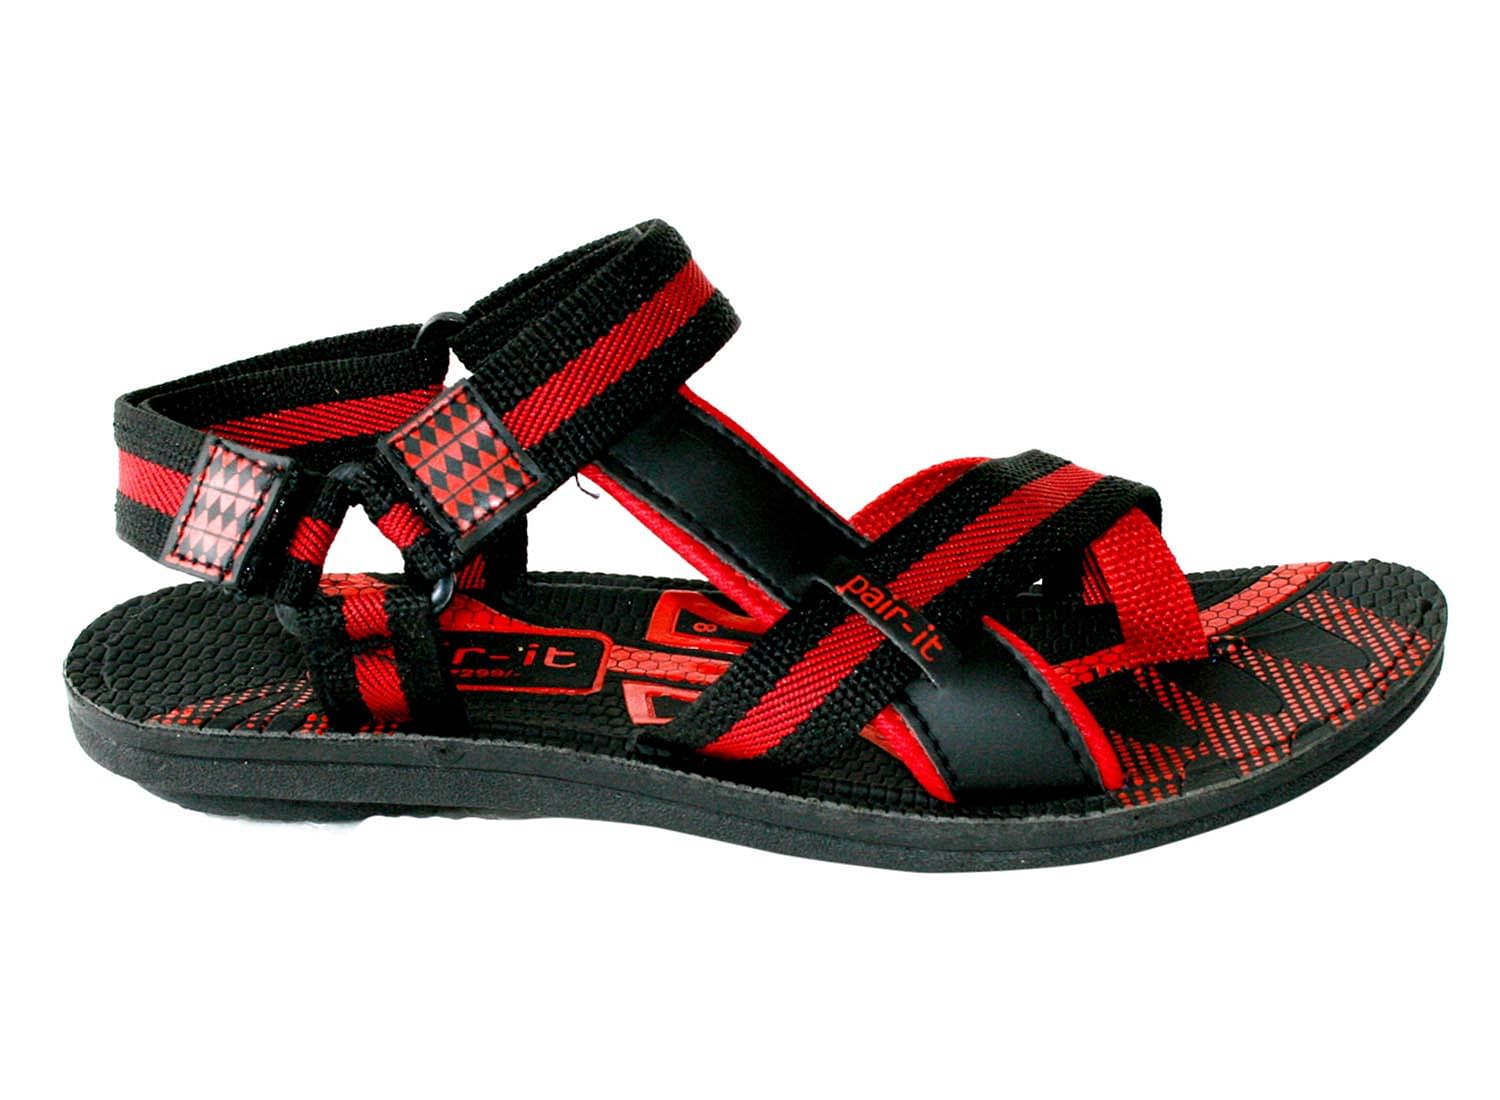 Pair-it Mn Sandals-RE-Gladio109-Black/Red